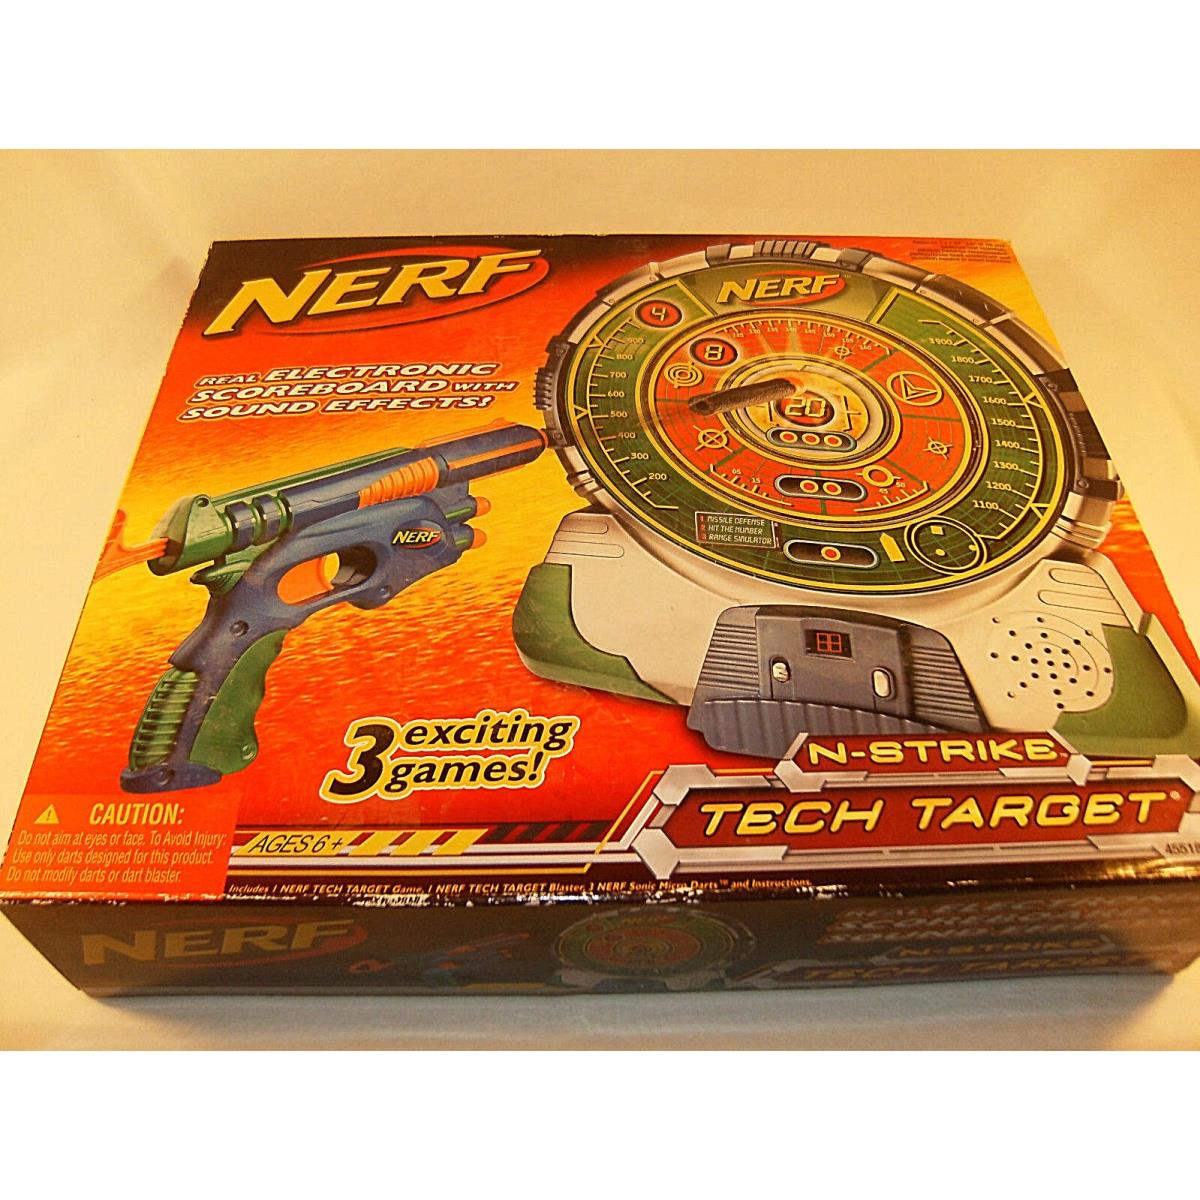 2006 Nerf N-strike Tech Target Electronic Scoreboard W/soft Darts+ Gun Game